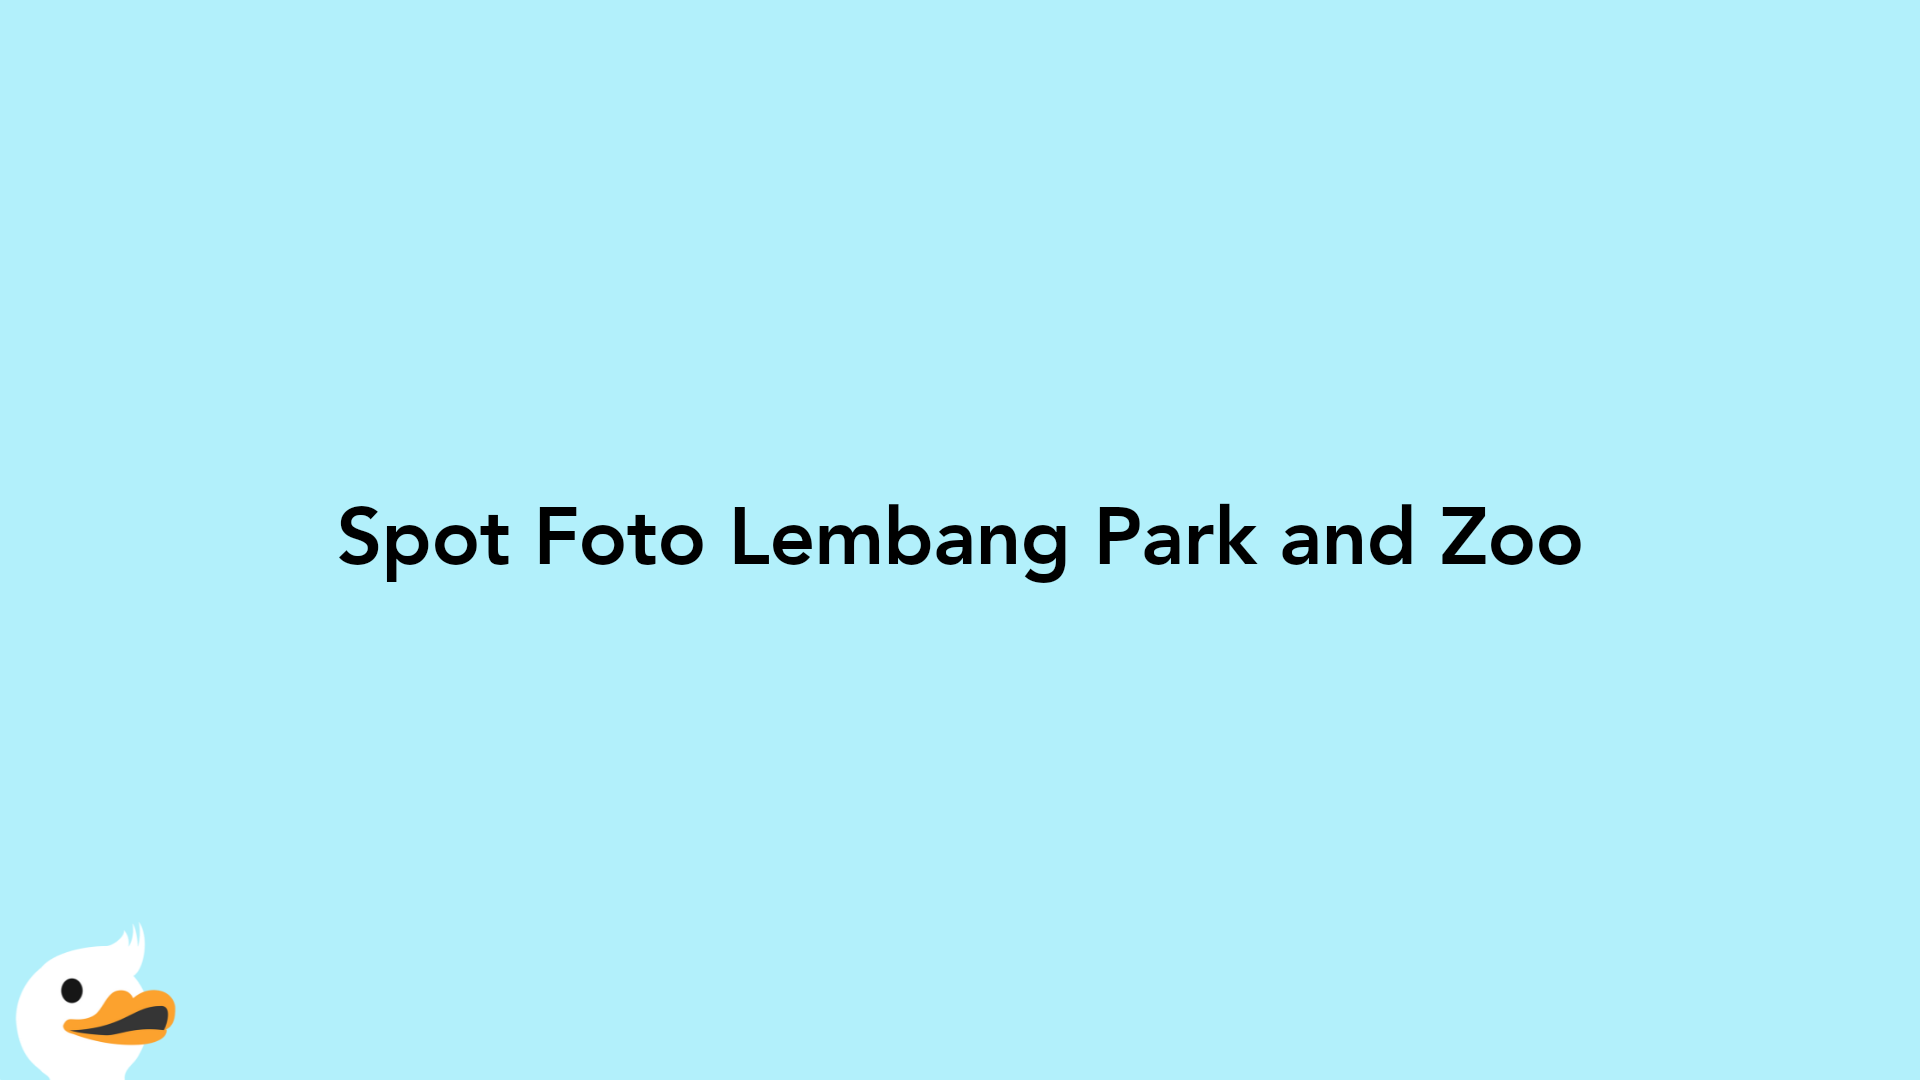 Spot Foto Lembang Park and Zoo